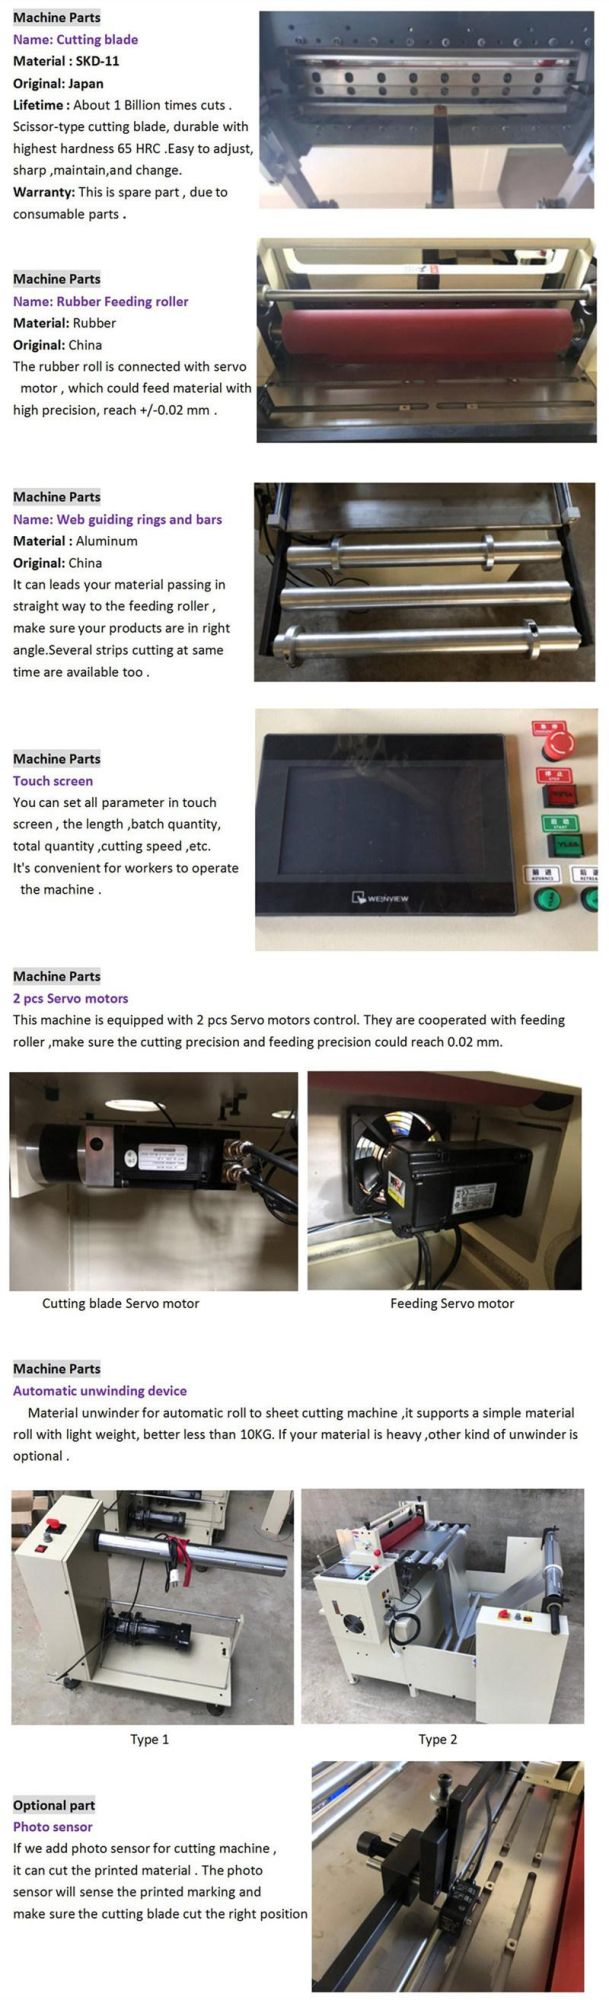 Automatic Printed Label Sheet Cutting Machine